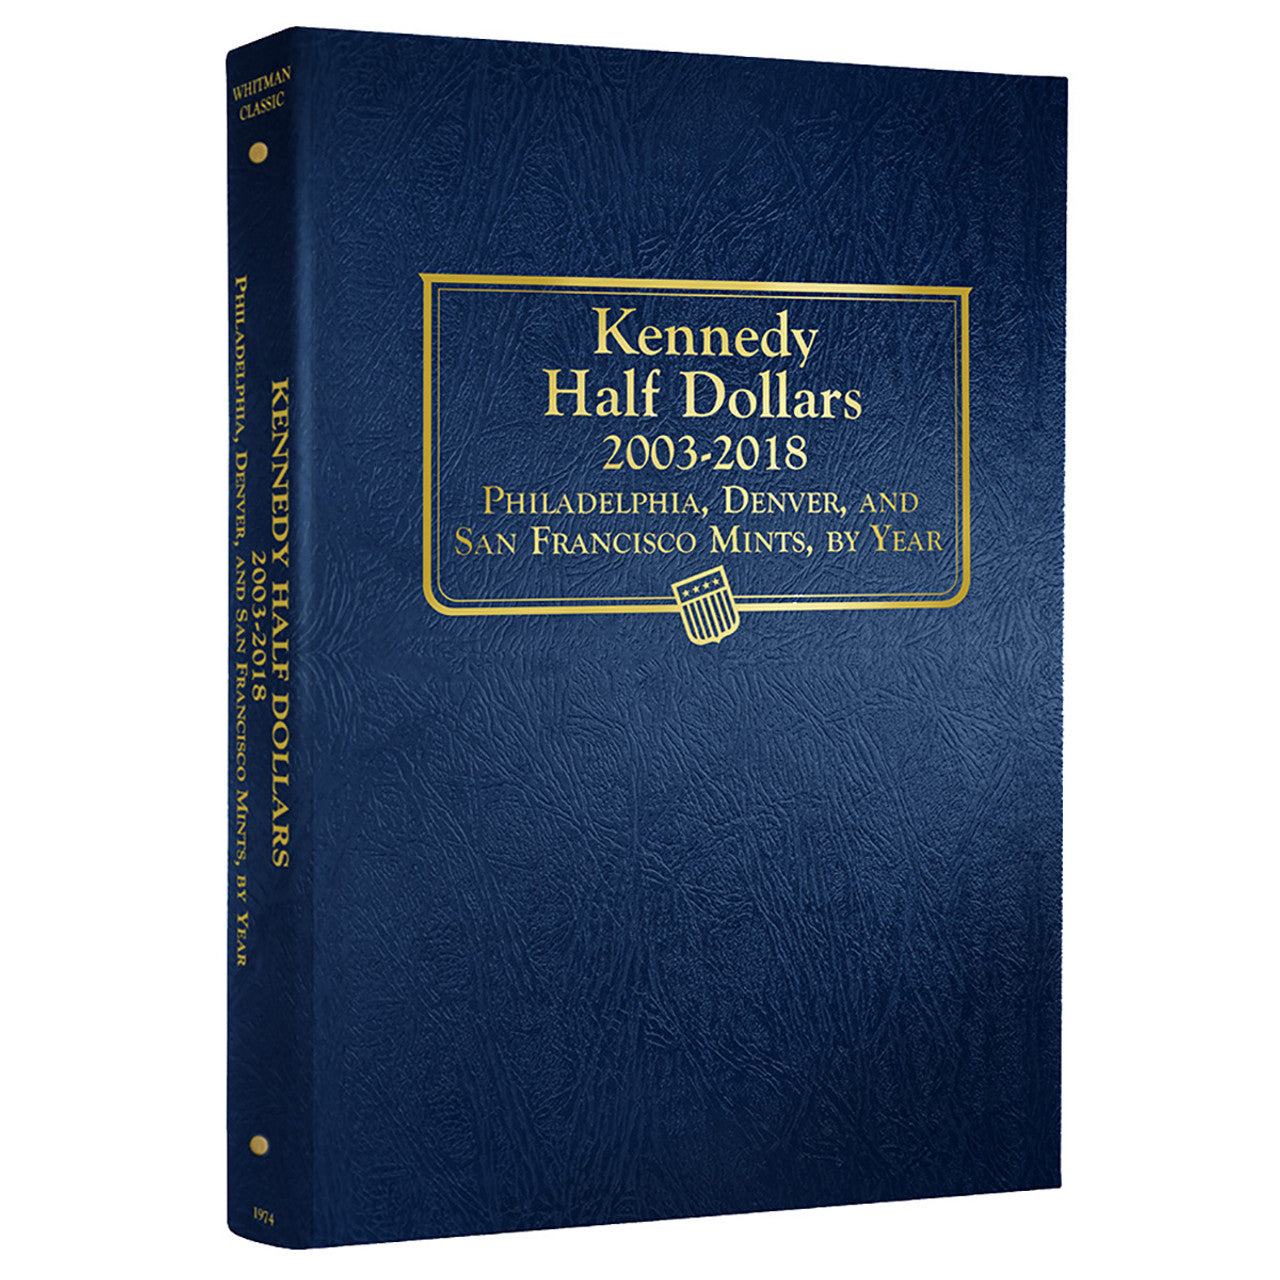 Whitman Kennedy Half Dollars 2003 - Album